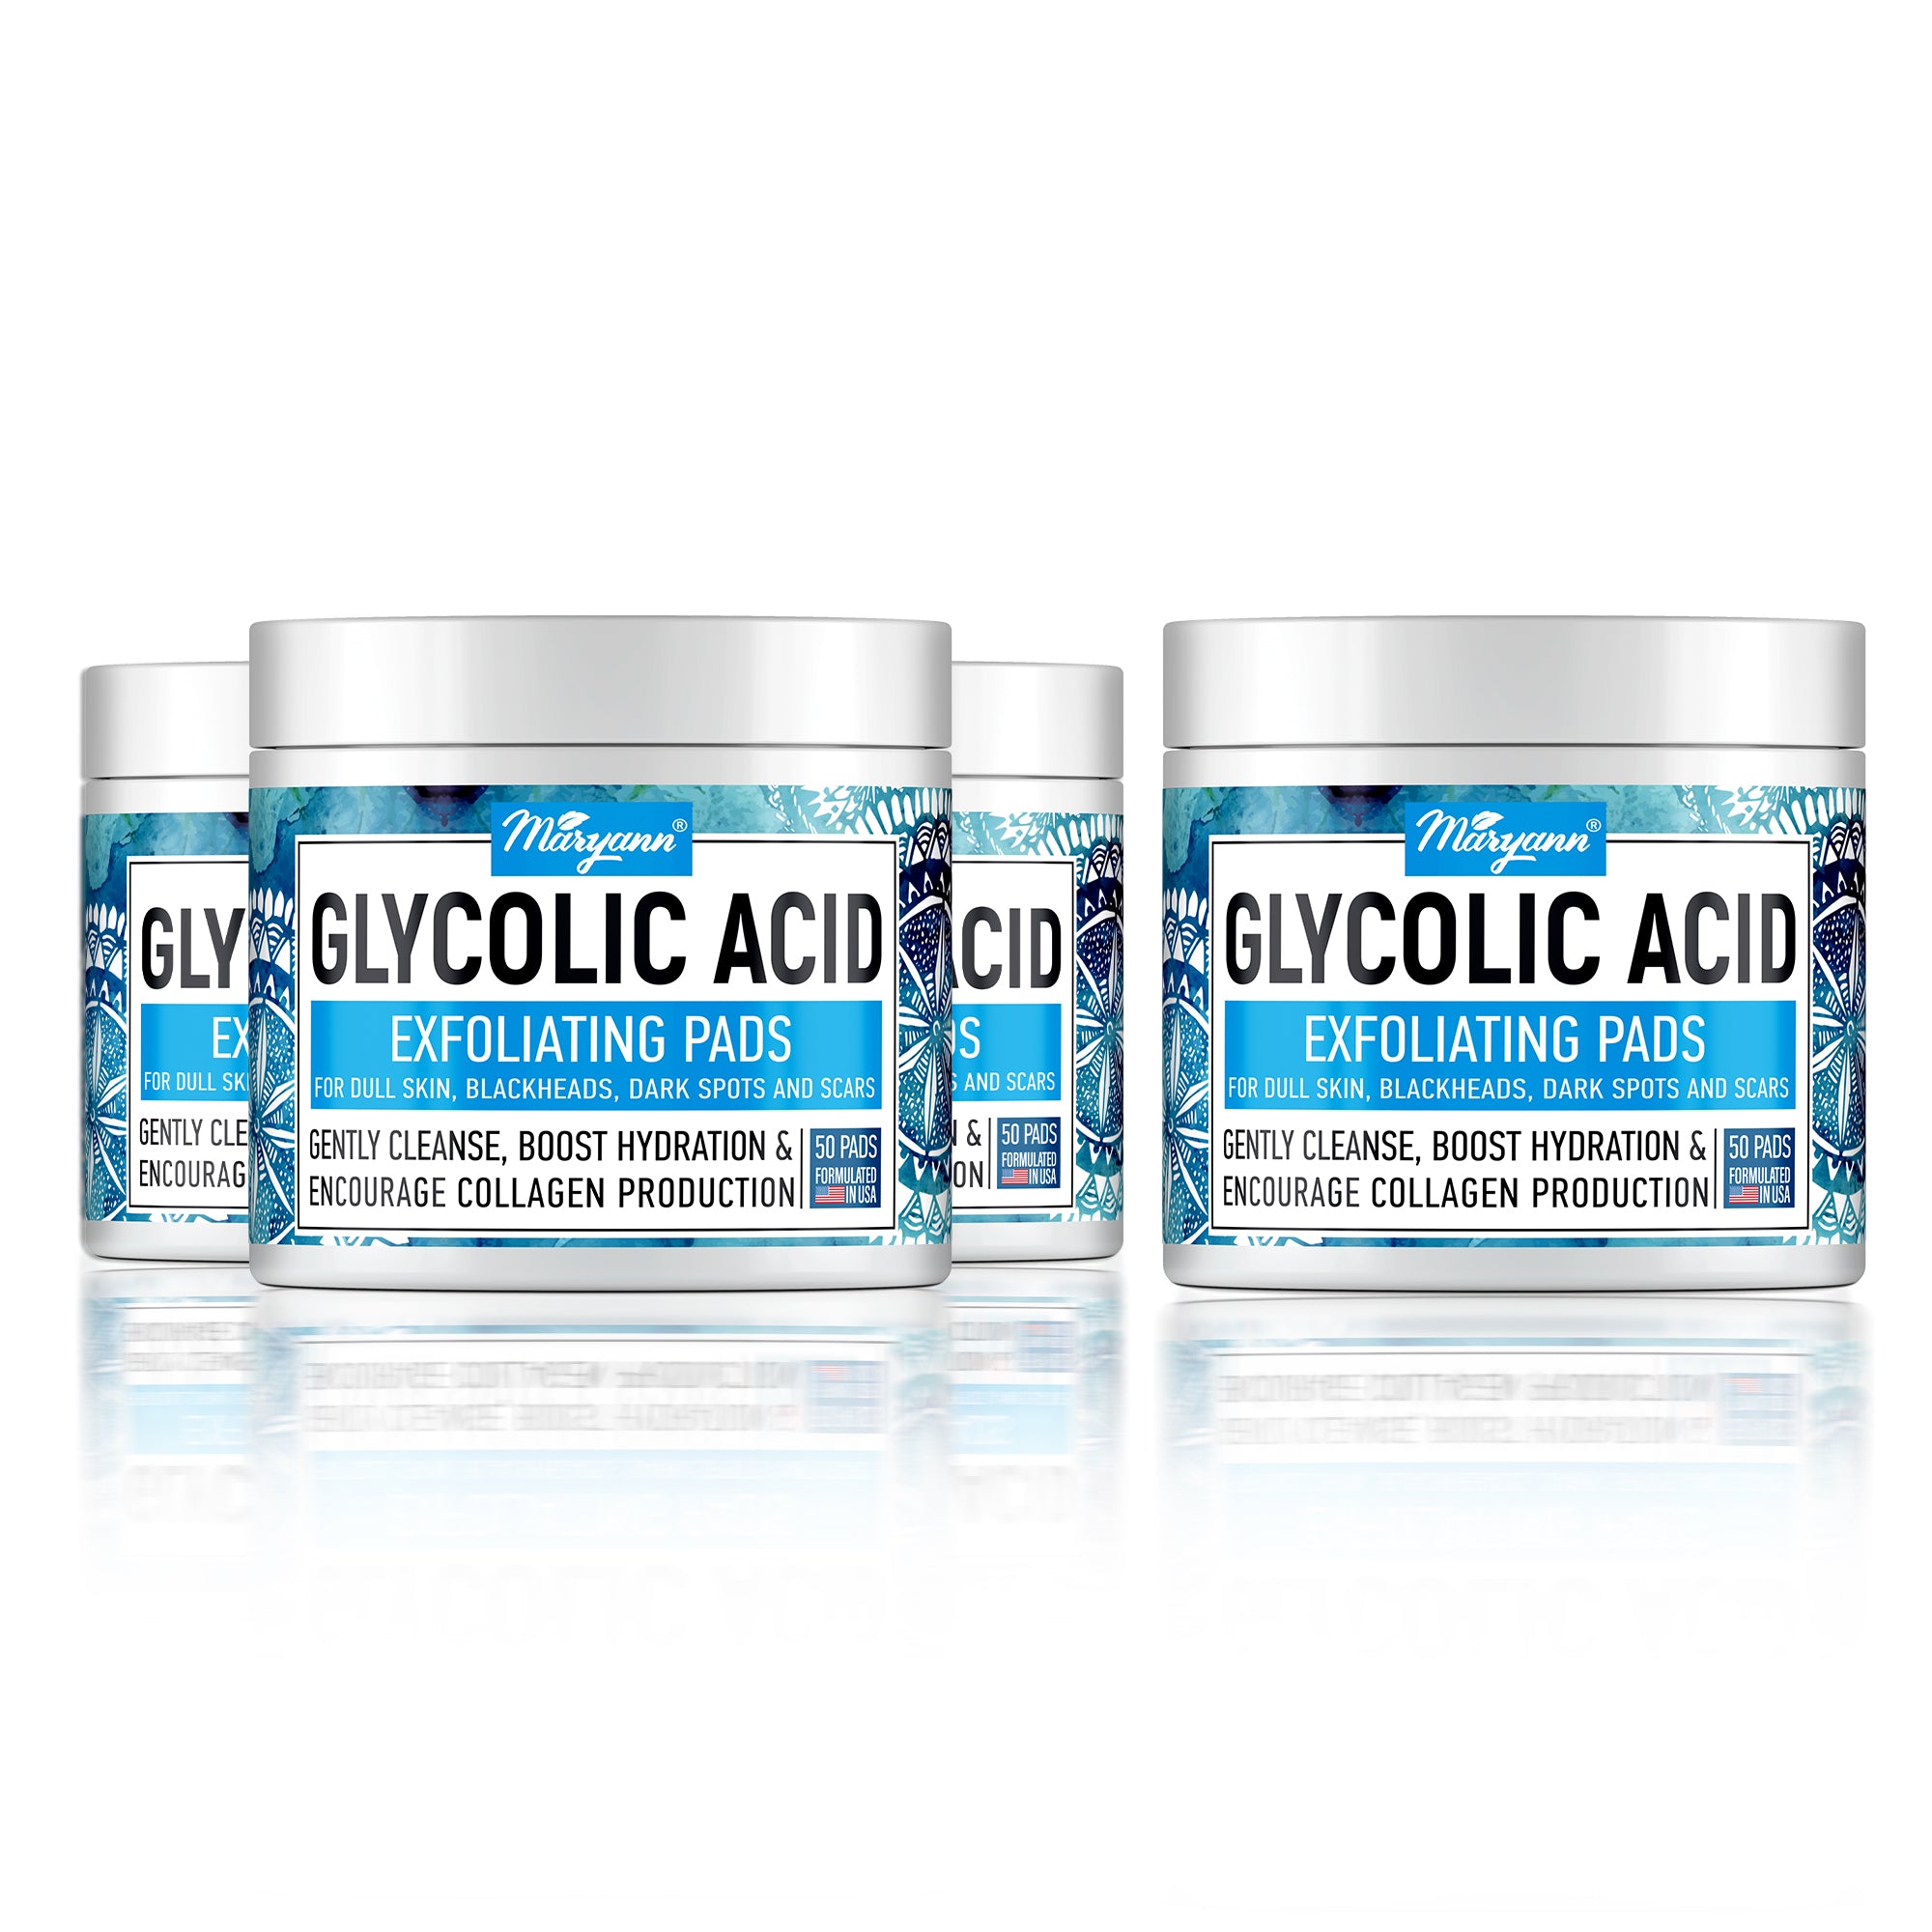 MaryAnn Glycolic Acid Pads - Buy 3 Get 1 Free